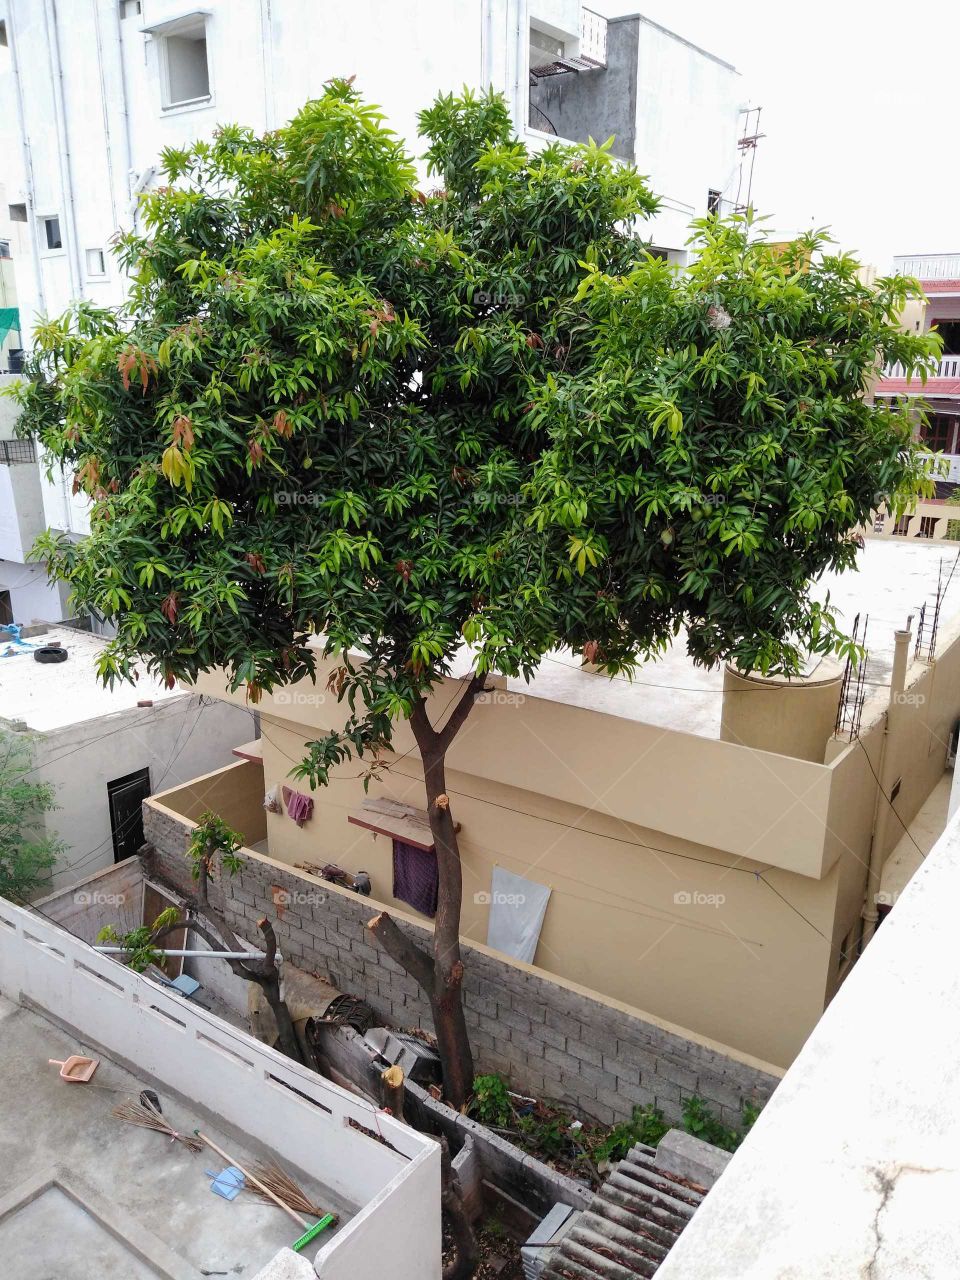 a mango tree with mangoes